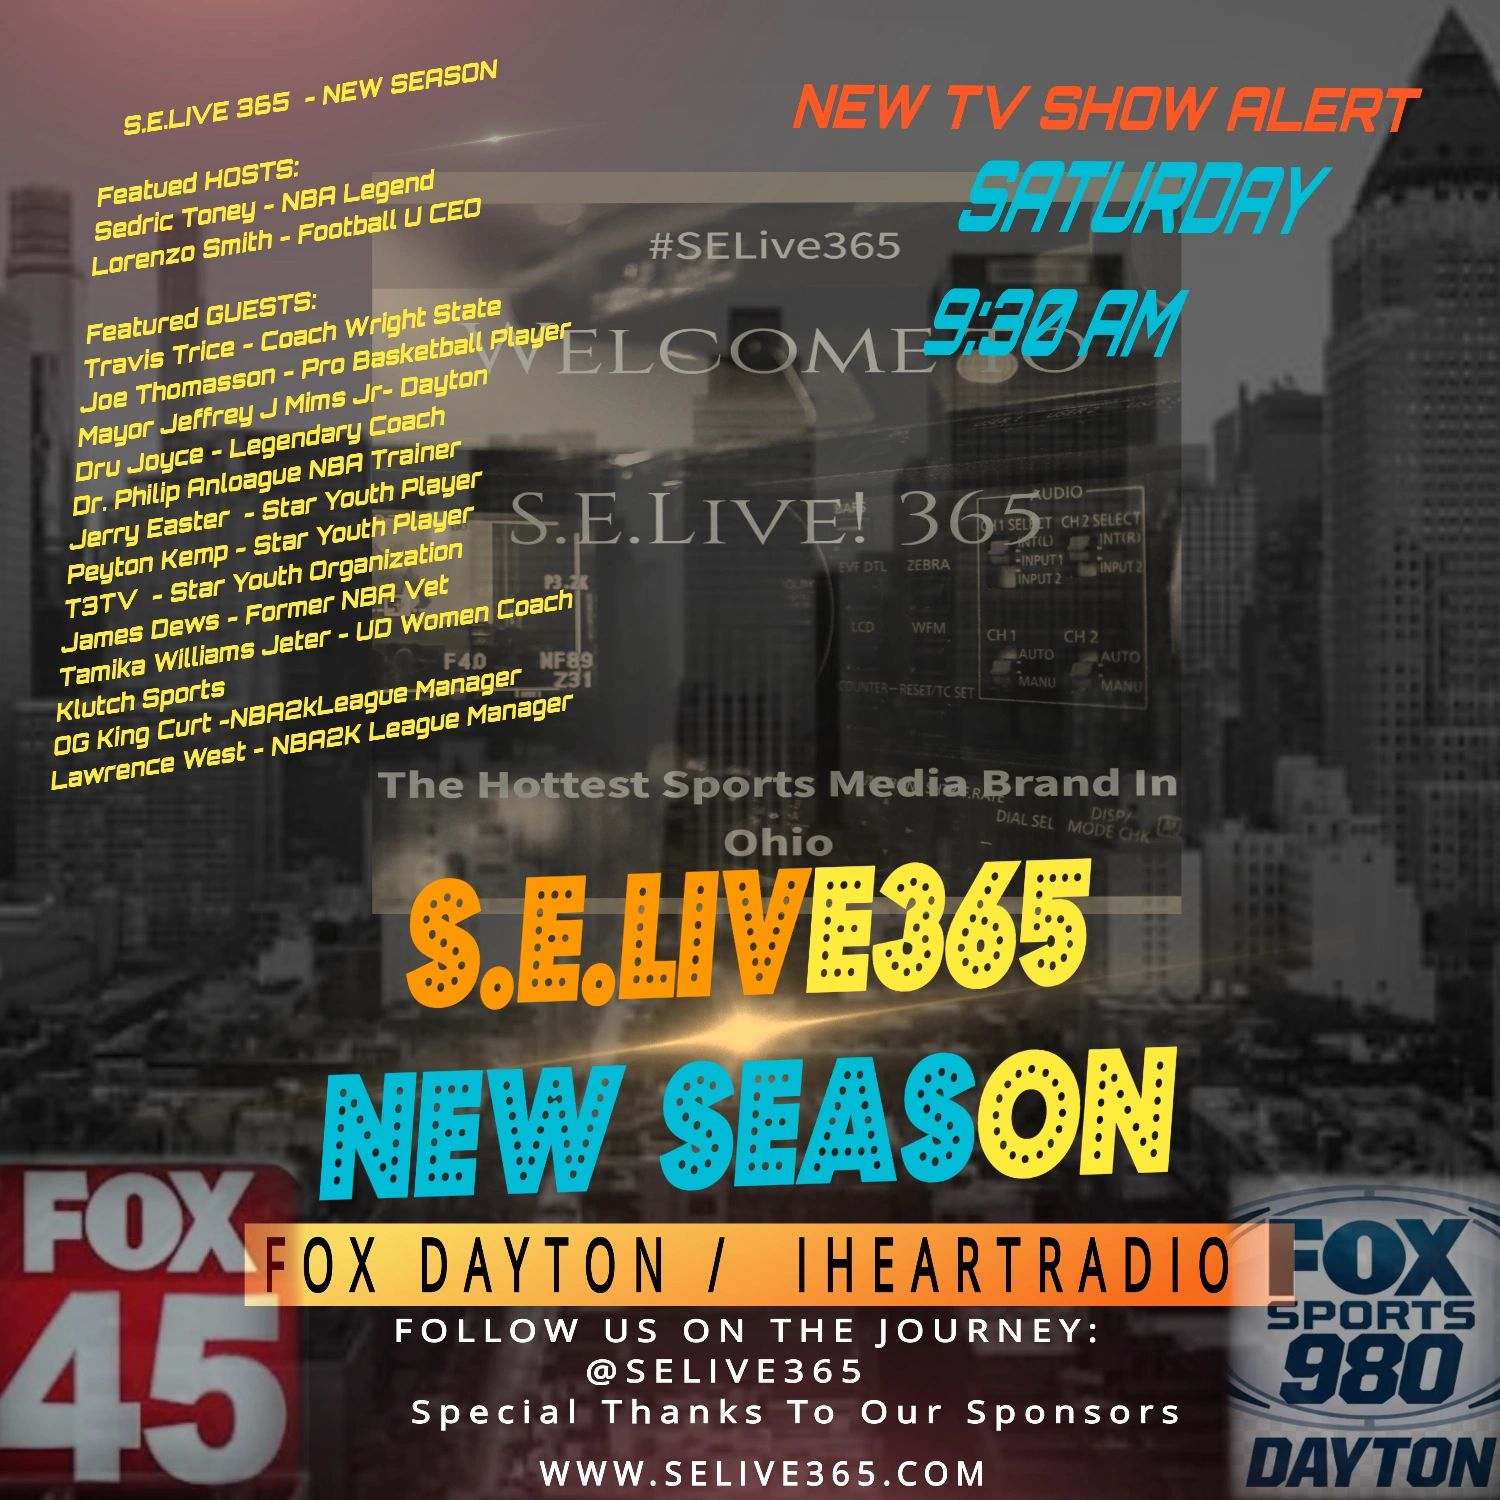 New Season on the Way with Fox Dayton 24-7